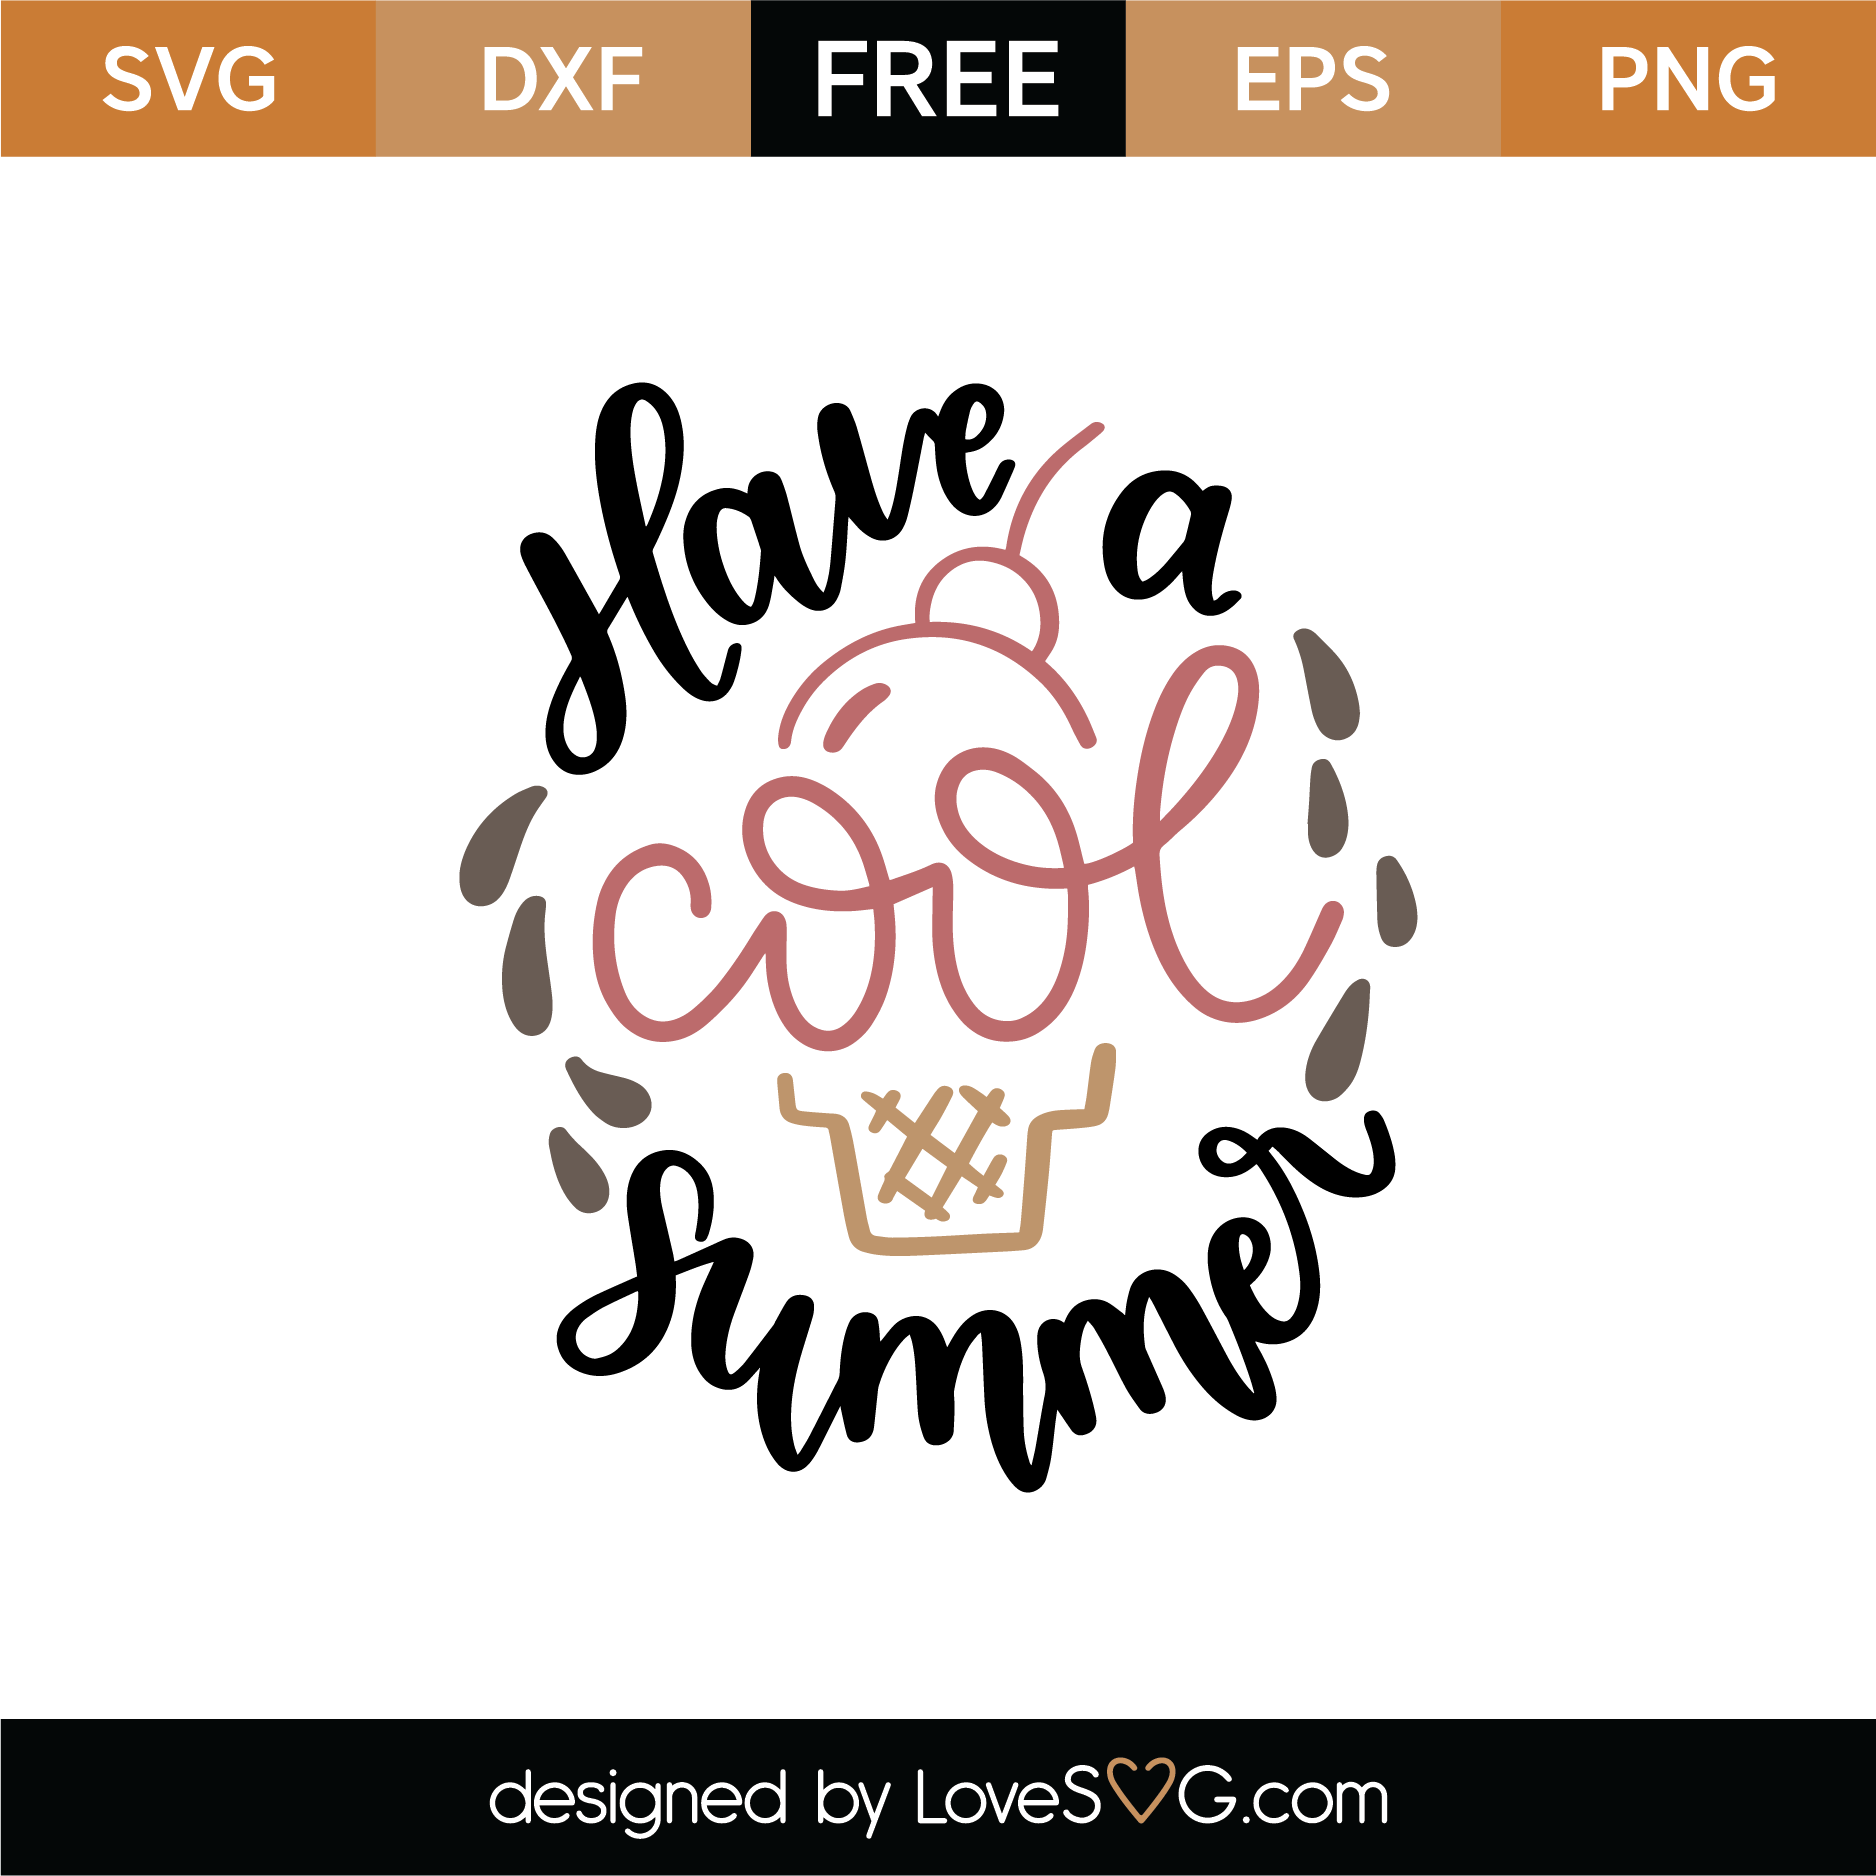 Free Have A Cool Summer SVG Cut File | Lovesvg.com